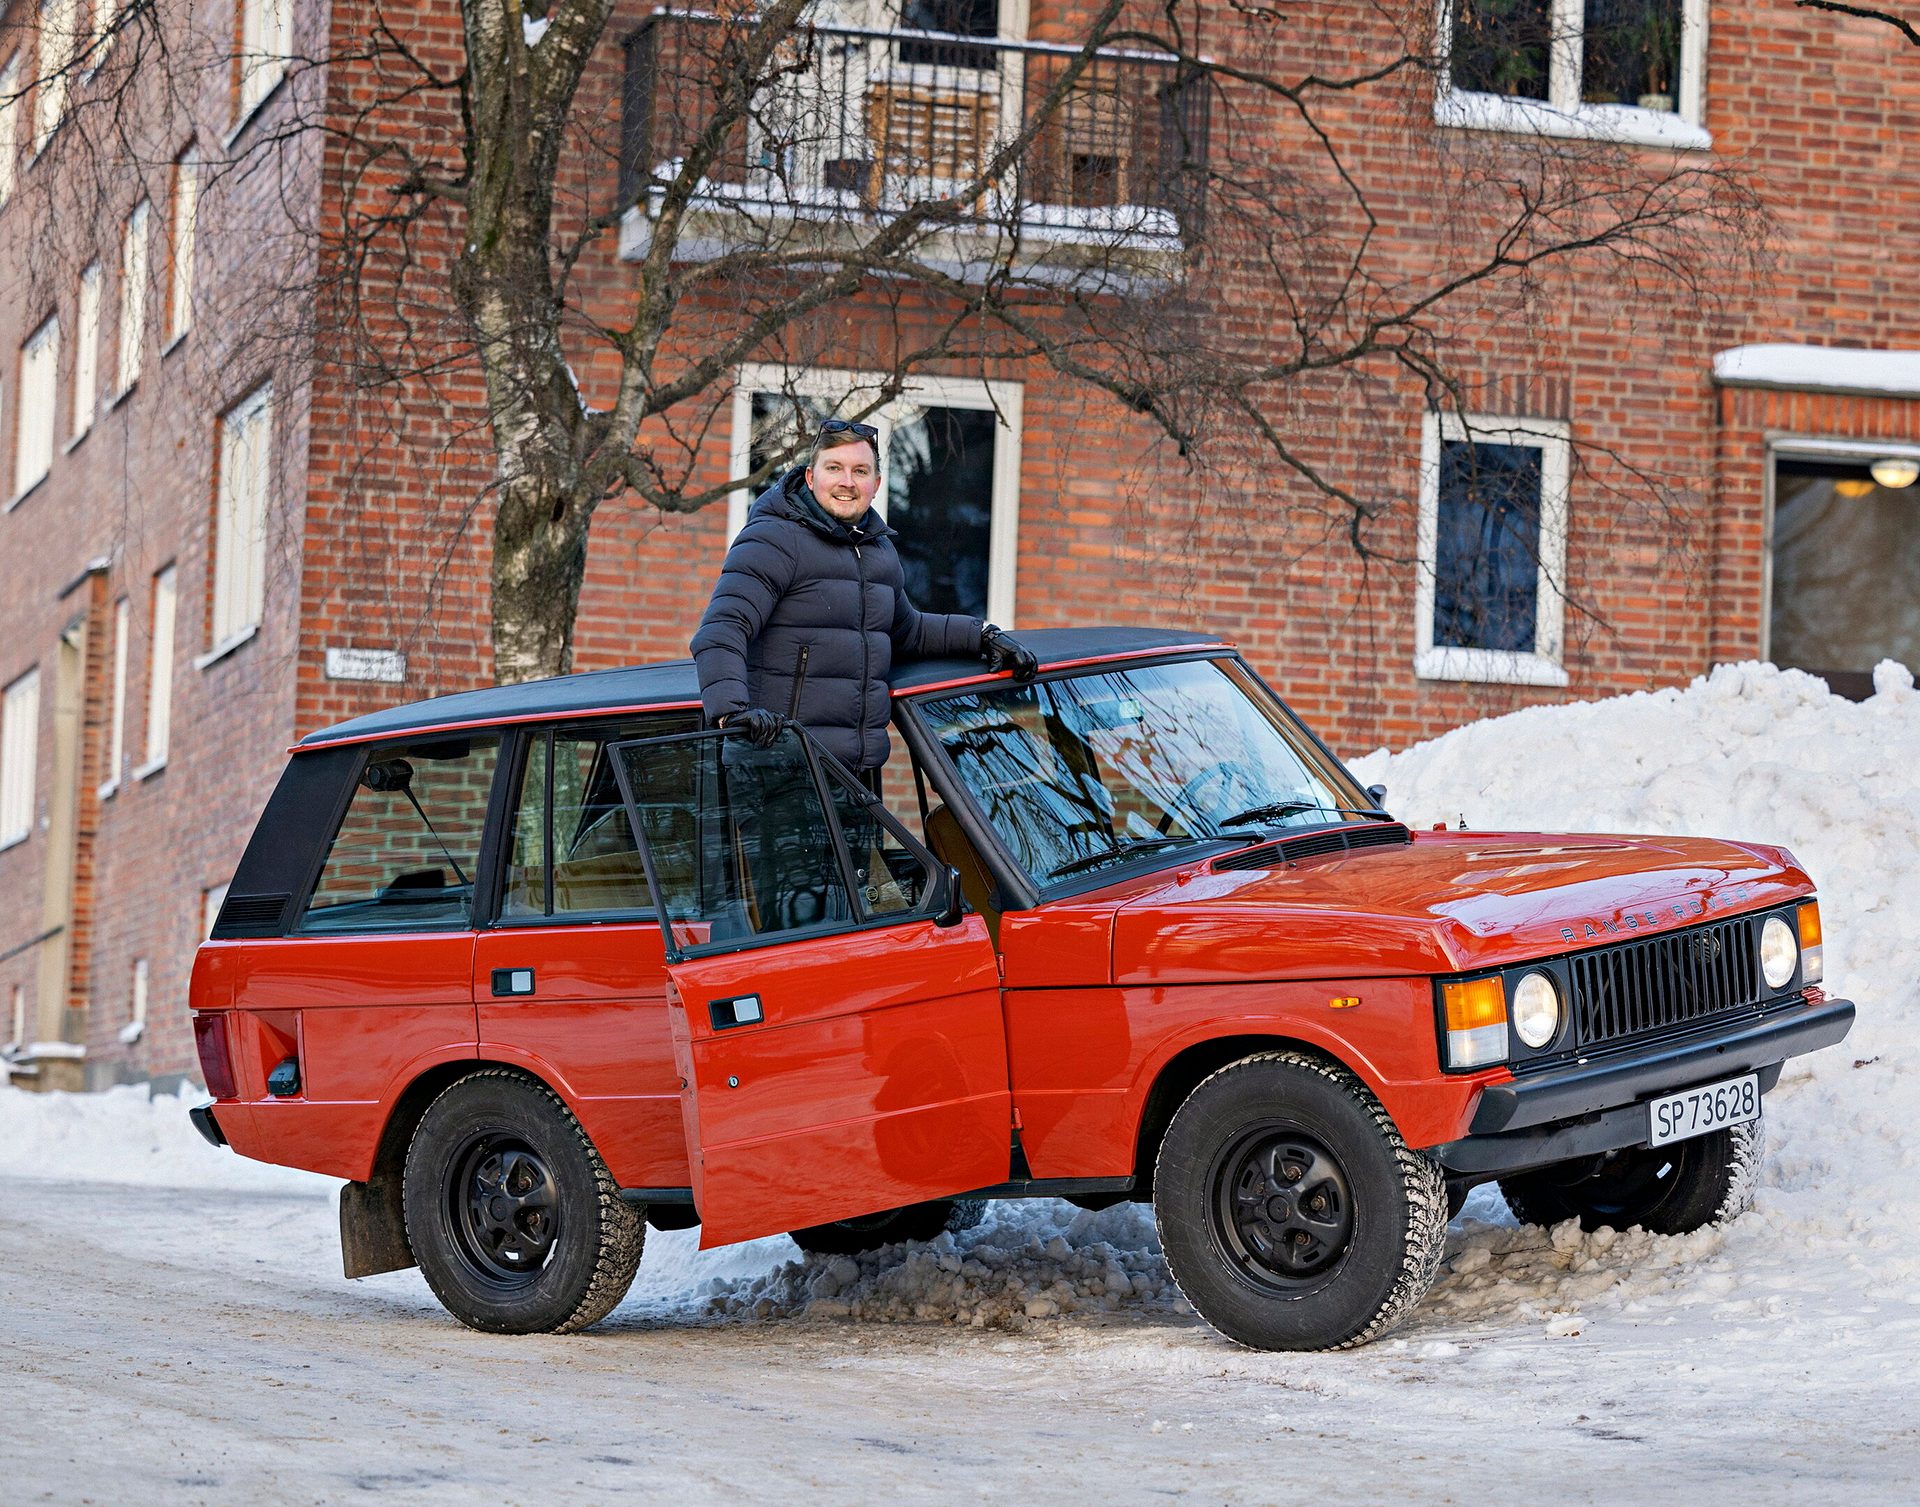 Automotive carrying rack, Land vehicle, Wheel, Tire, Car, Window, Snow, Building